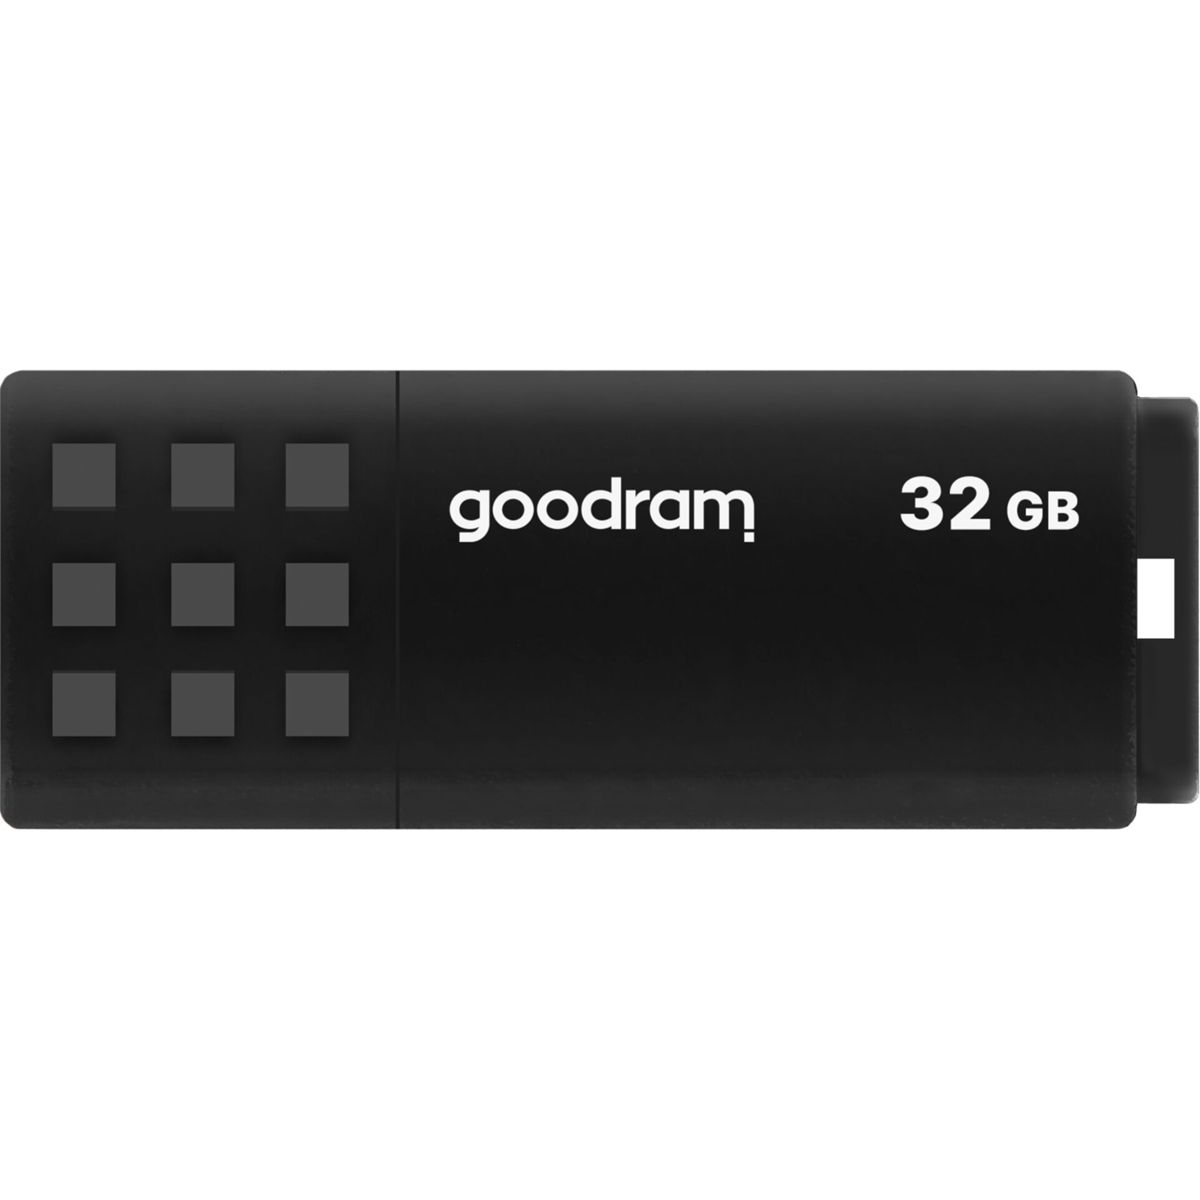 GB) USB (schwarz, GOODRAM Black 32 3.0 UME3 USB 32GB Stick